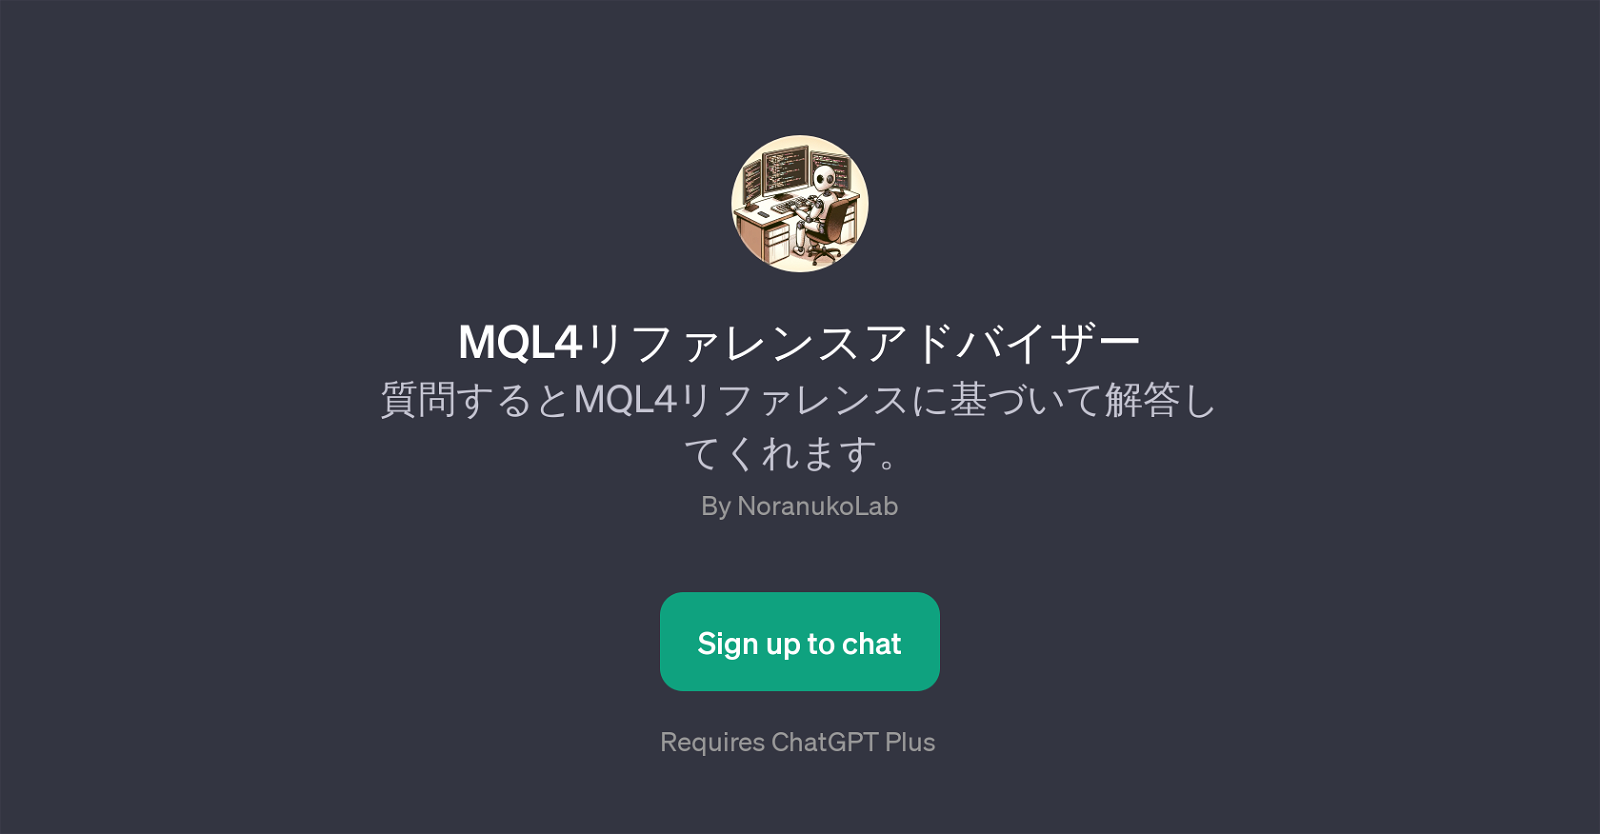 MQL4 website